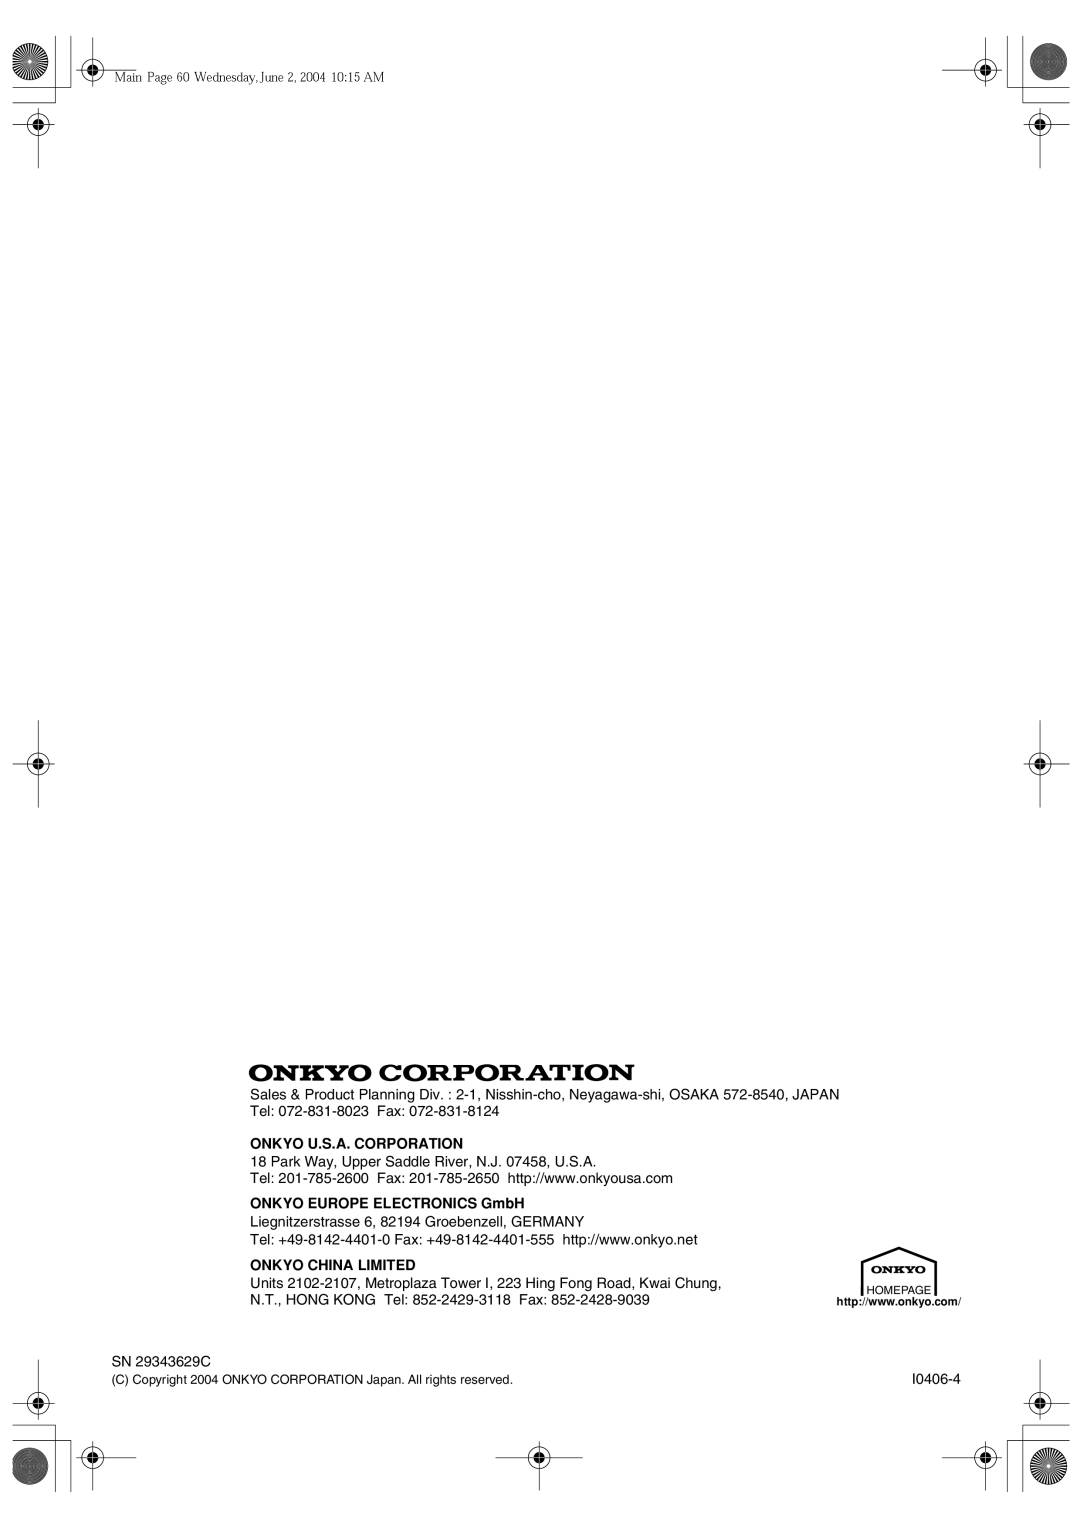 Onkyo TX-SR502E, TX-SR8250 instruction manual Onkyo U.S.A. Corporation, ONKYO EUROPE ELECTRONICS GmbH, Onkyo China Limited 